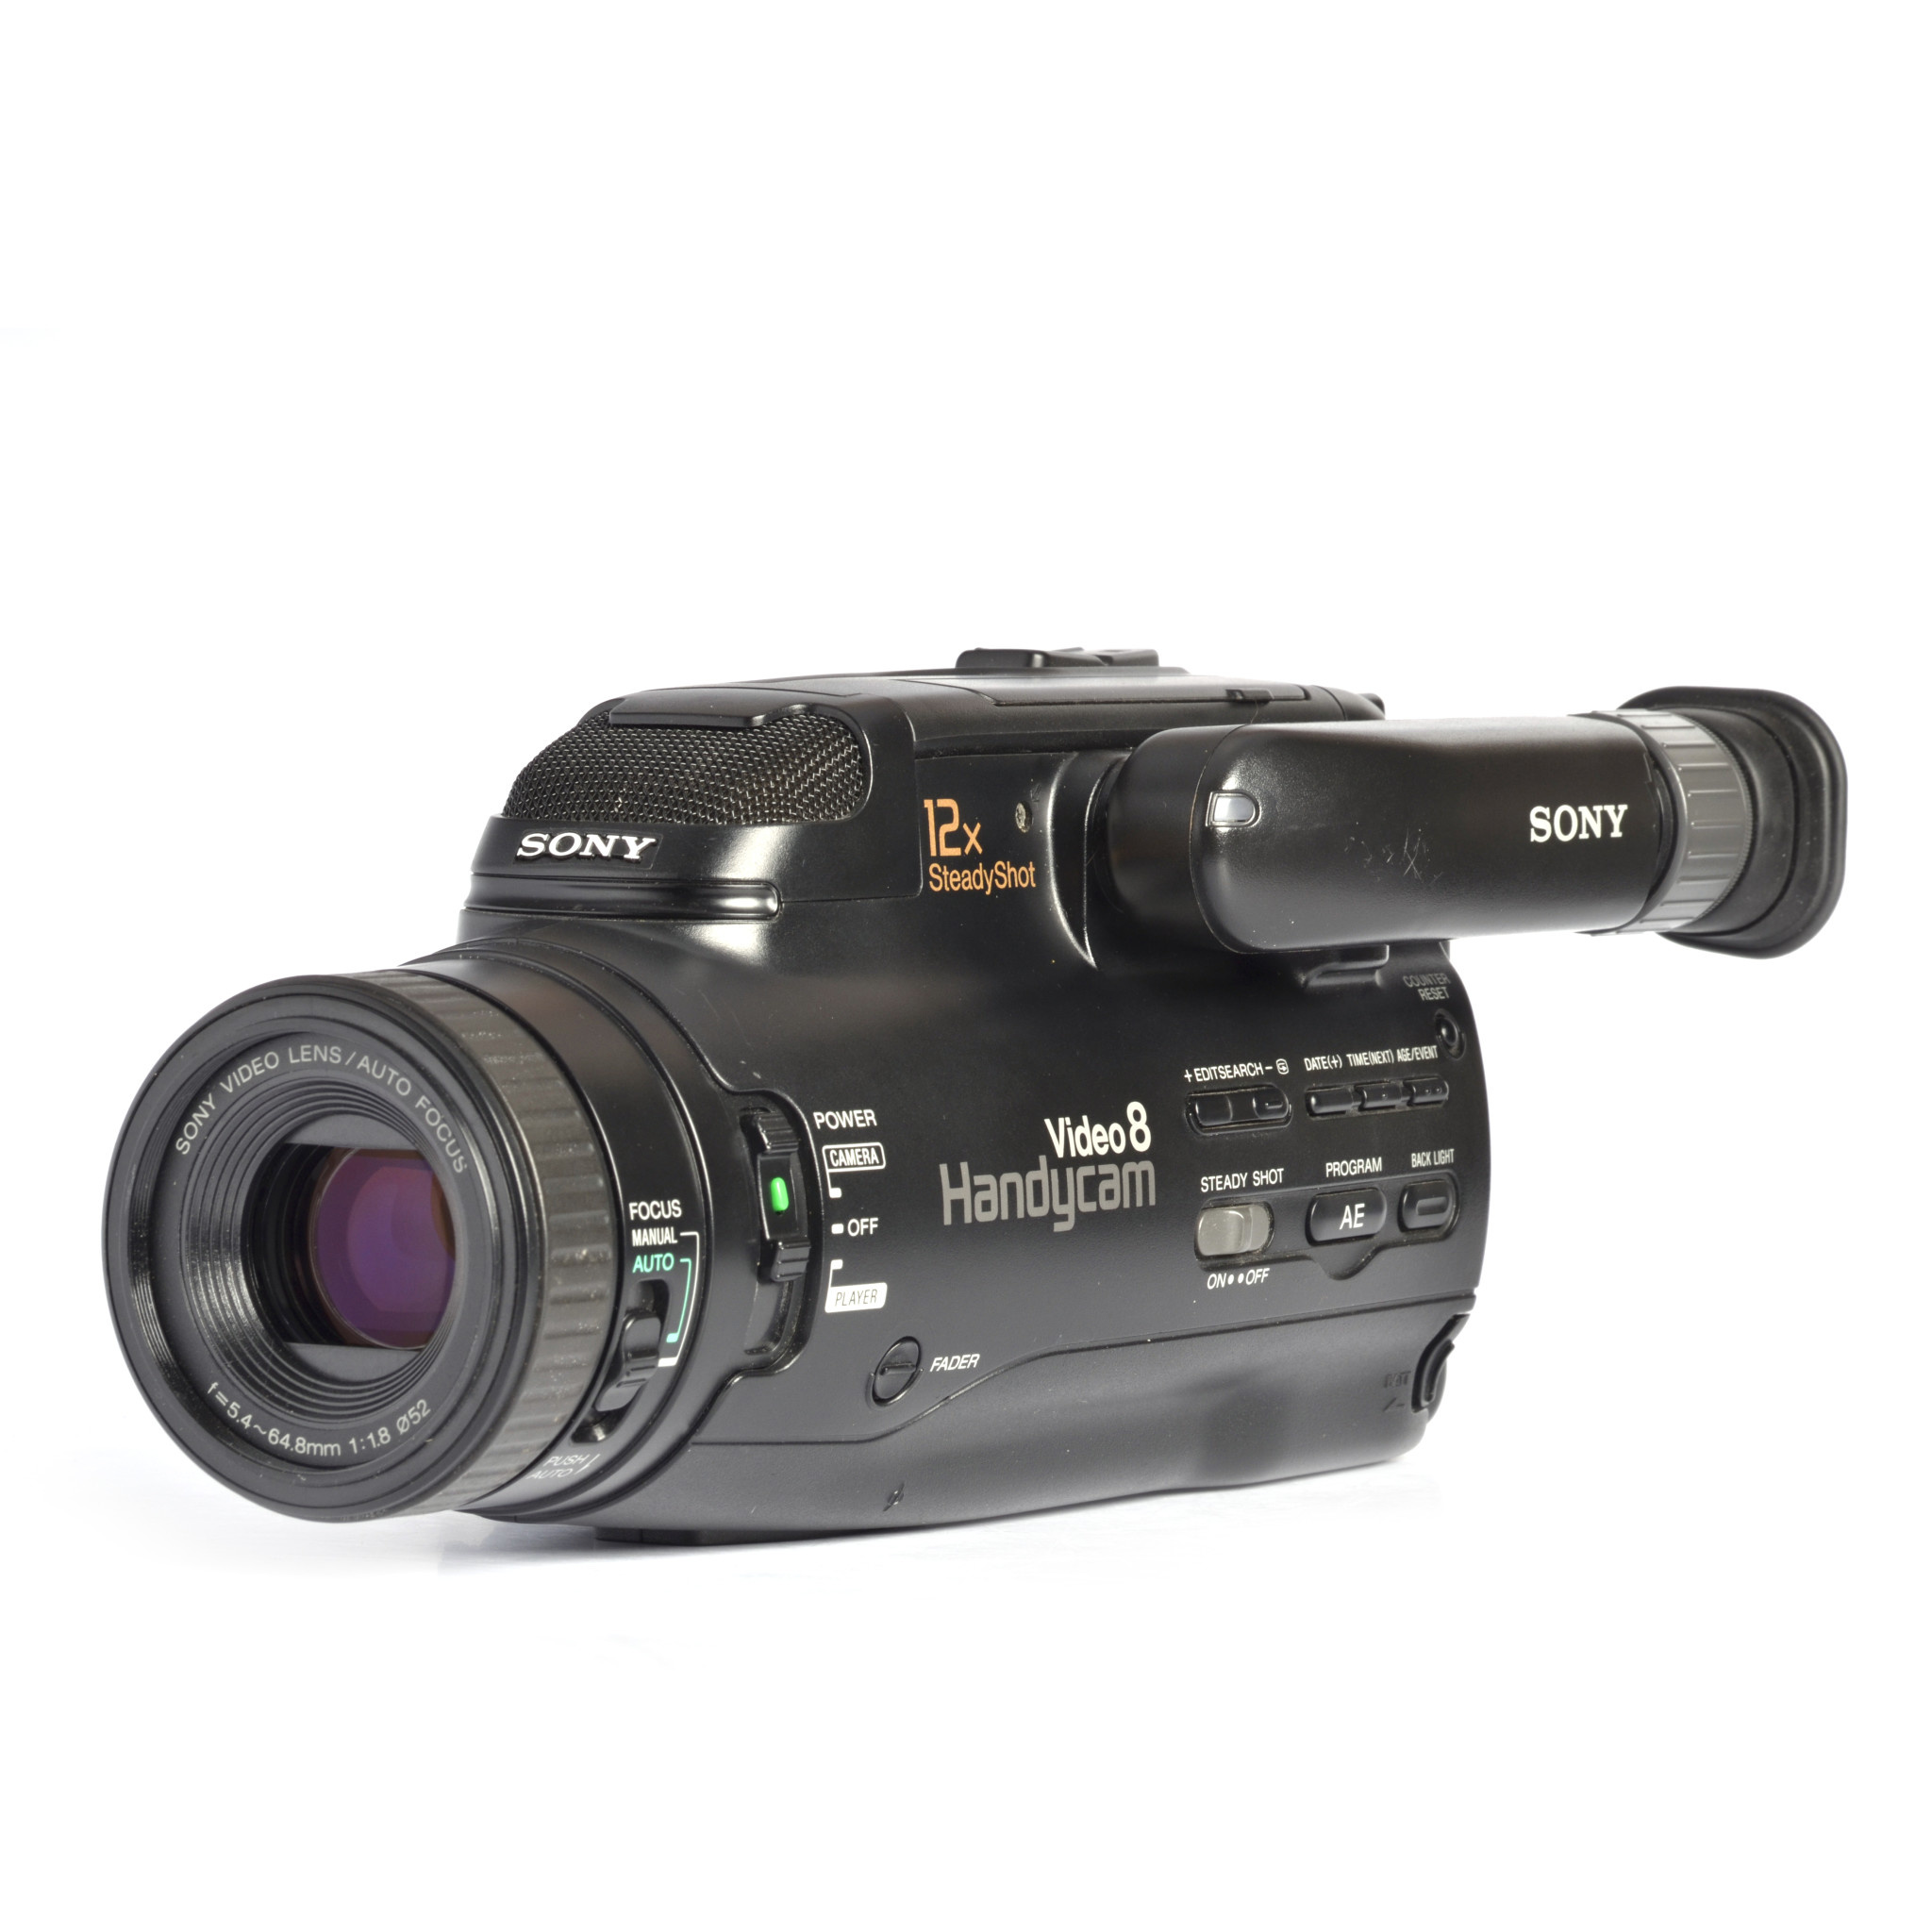 Sony Sony Video 8 Handycam CCD-FX630